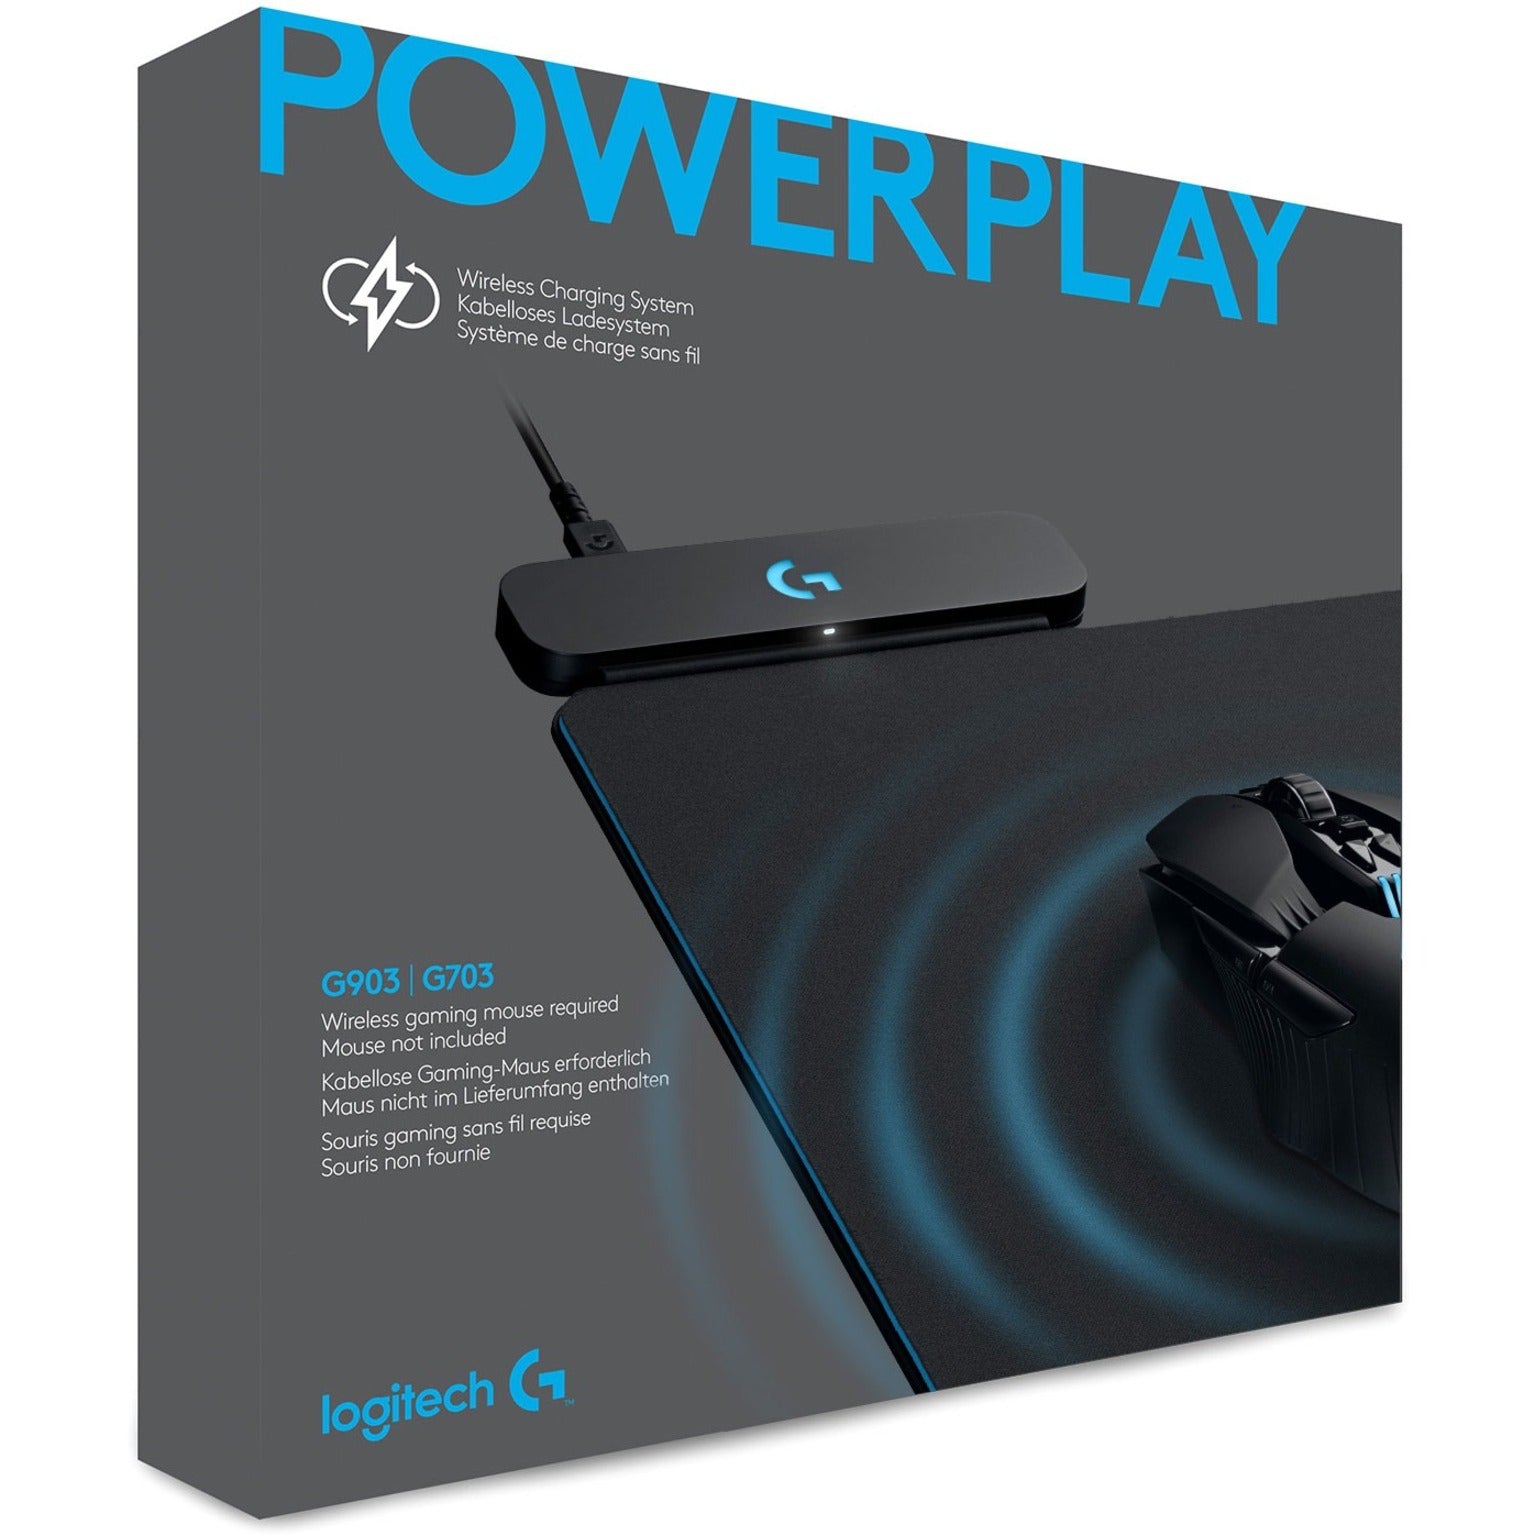 Logitech 943-000109 POWERPLAY Wireless Charging System, Gaming Accessory Kit